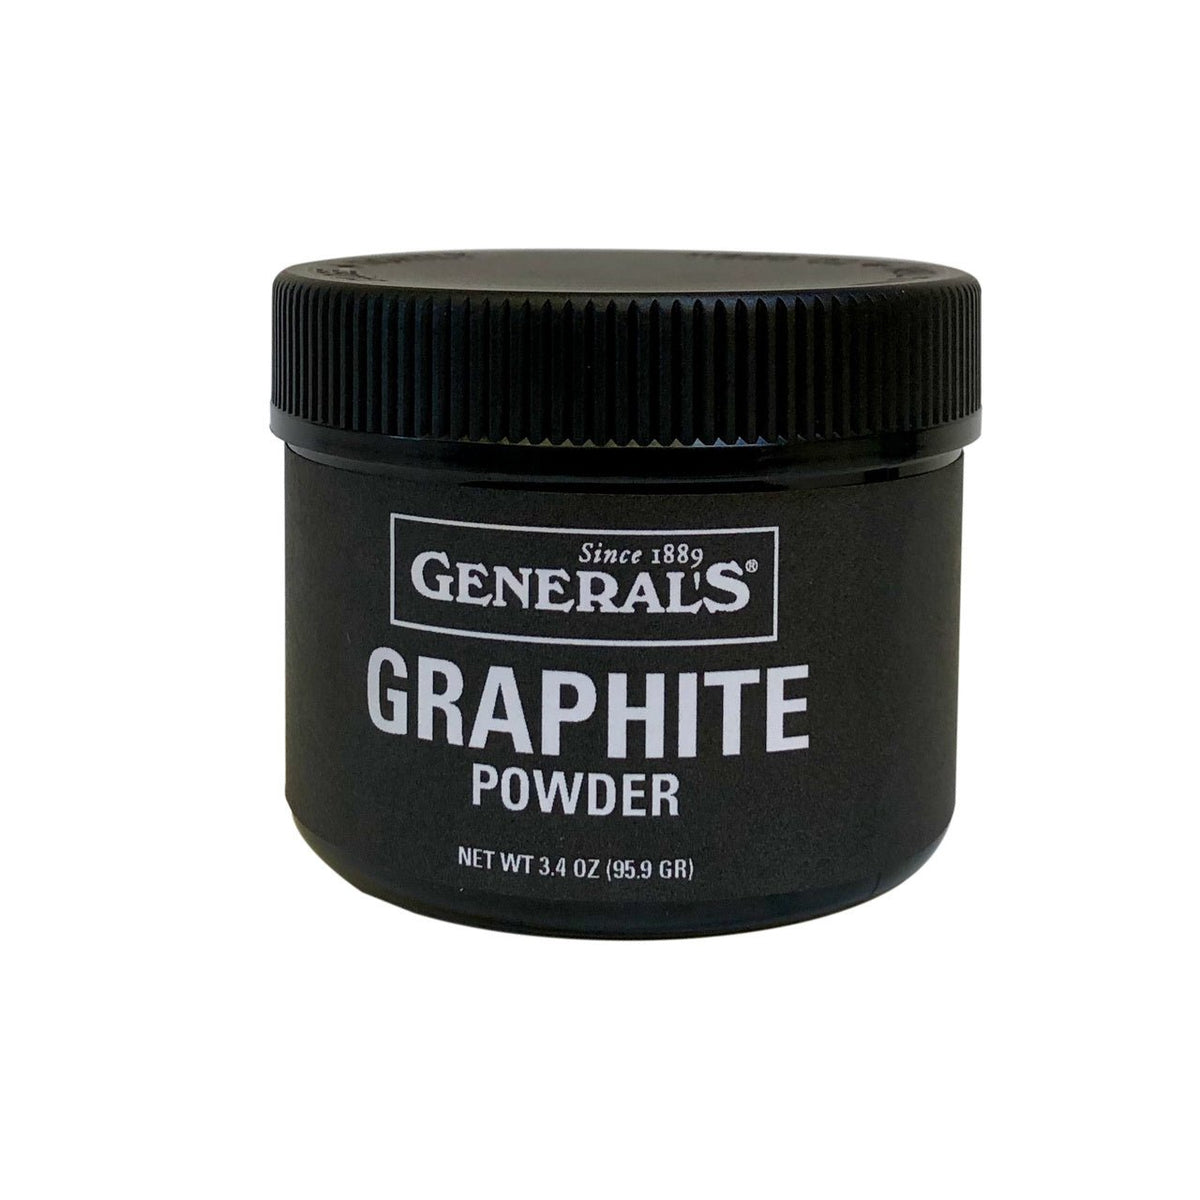 Generals Graphite Powder 3.4 ounce jar - merriartist.com